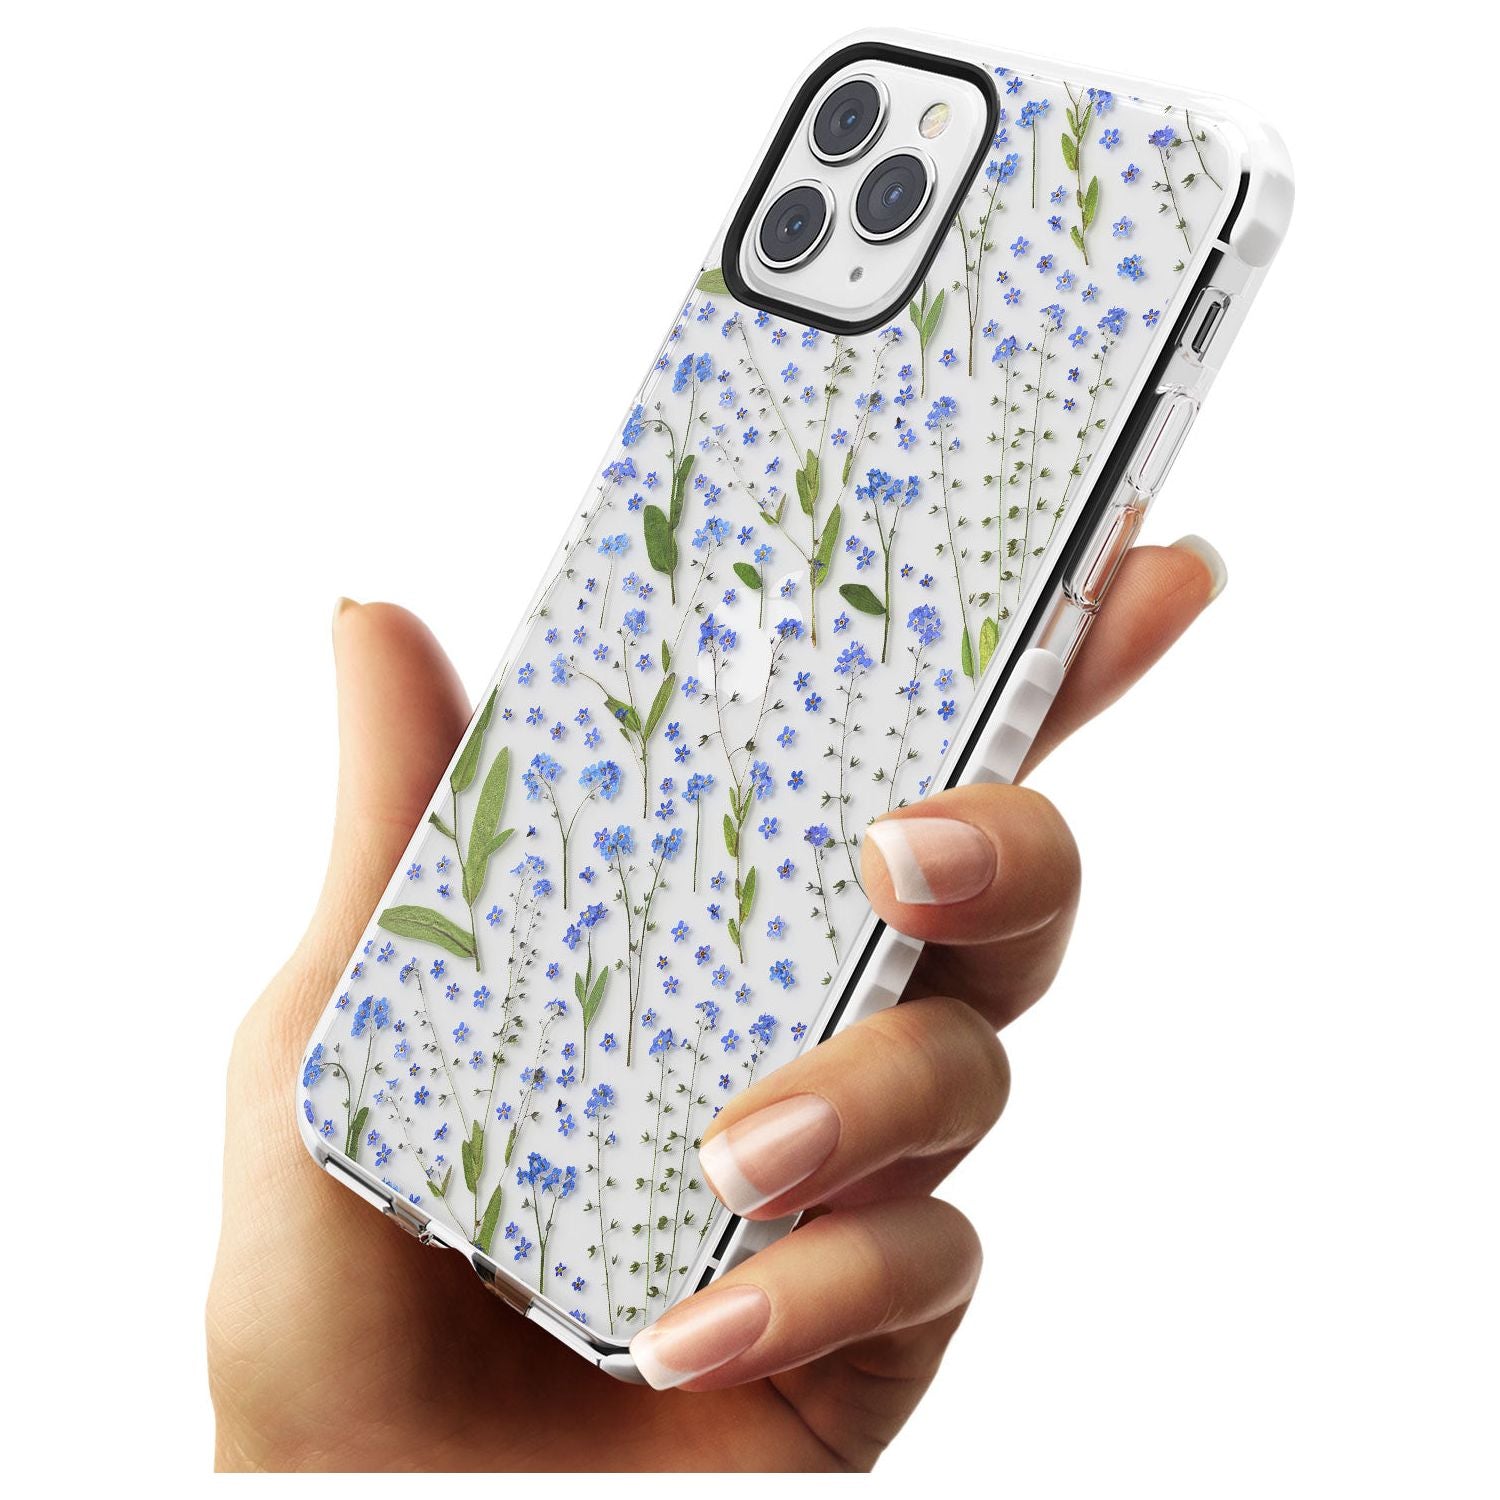 Blue Wild Flower Design Impact Phone Case for iPhone 11 Pro Max